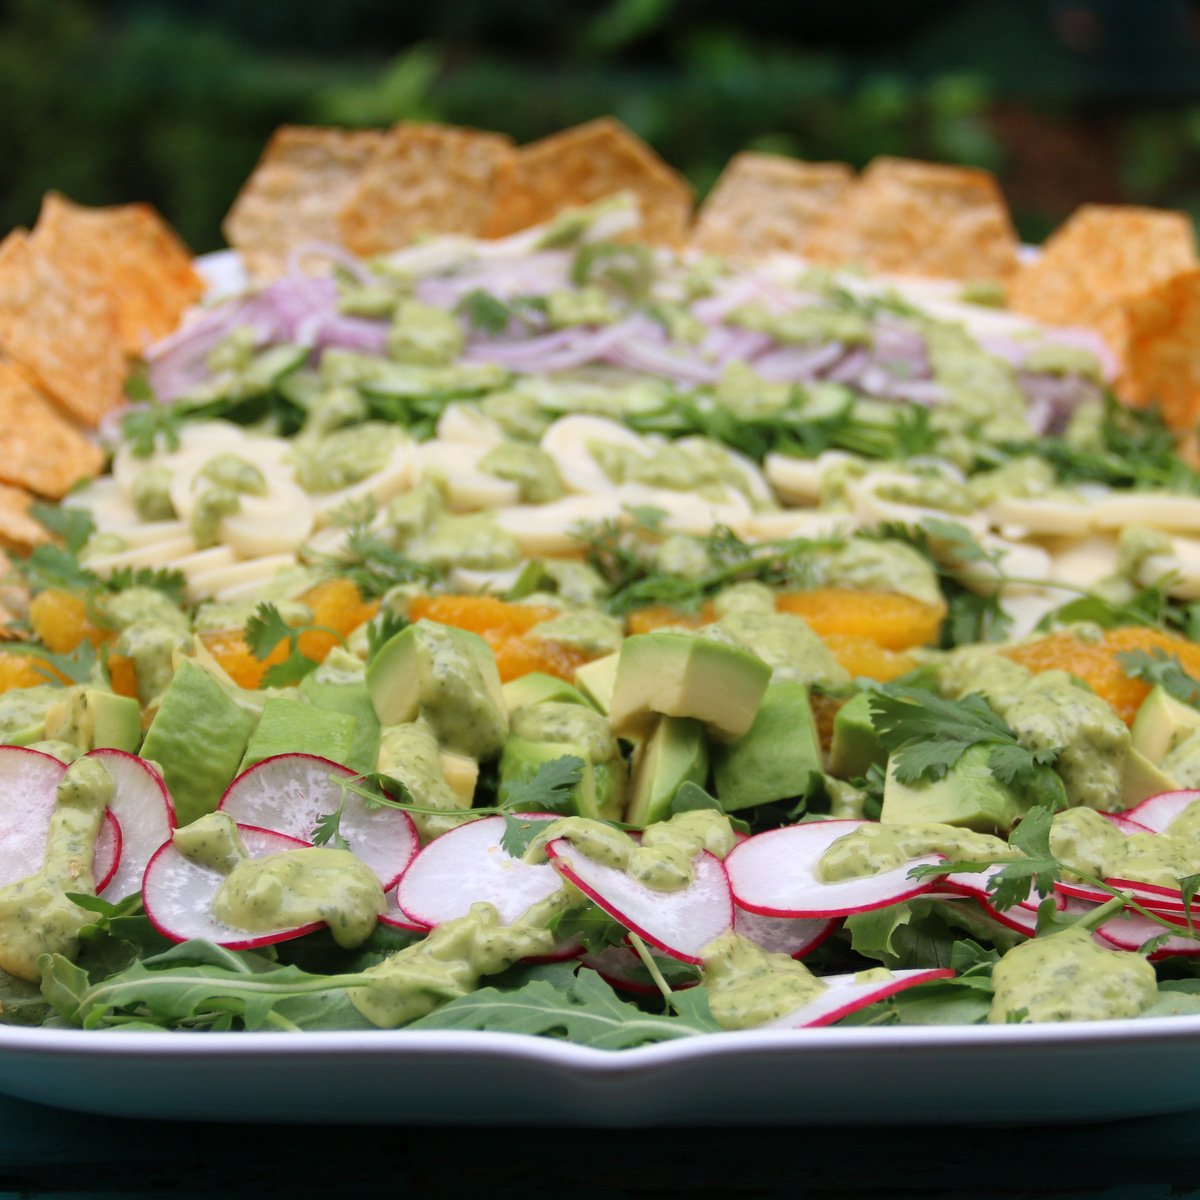 Mixed salad with avocado cilantro dressing